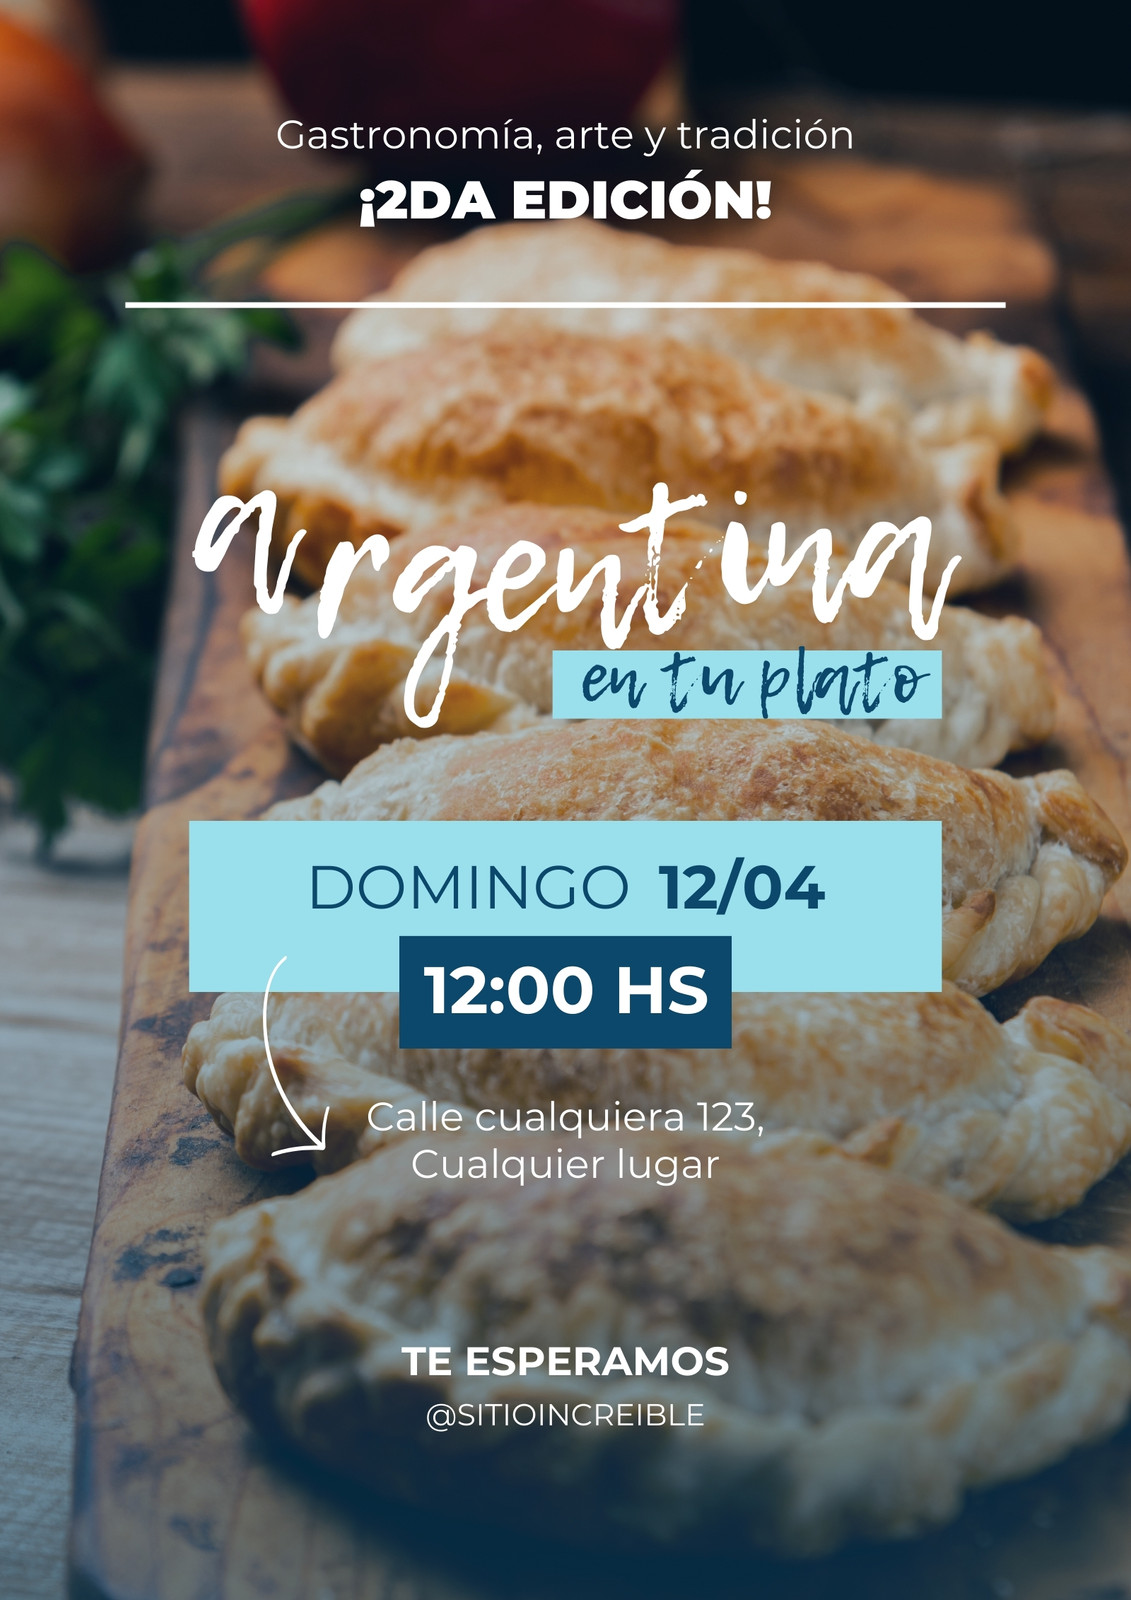 Flyer informativo gastronomia argentina fotografia empanadas azul